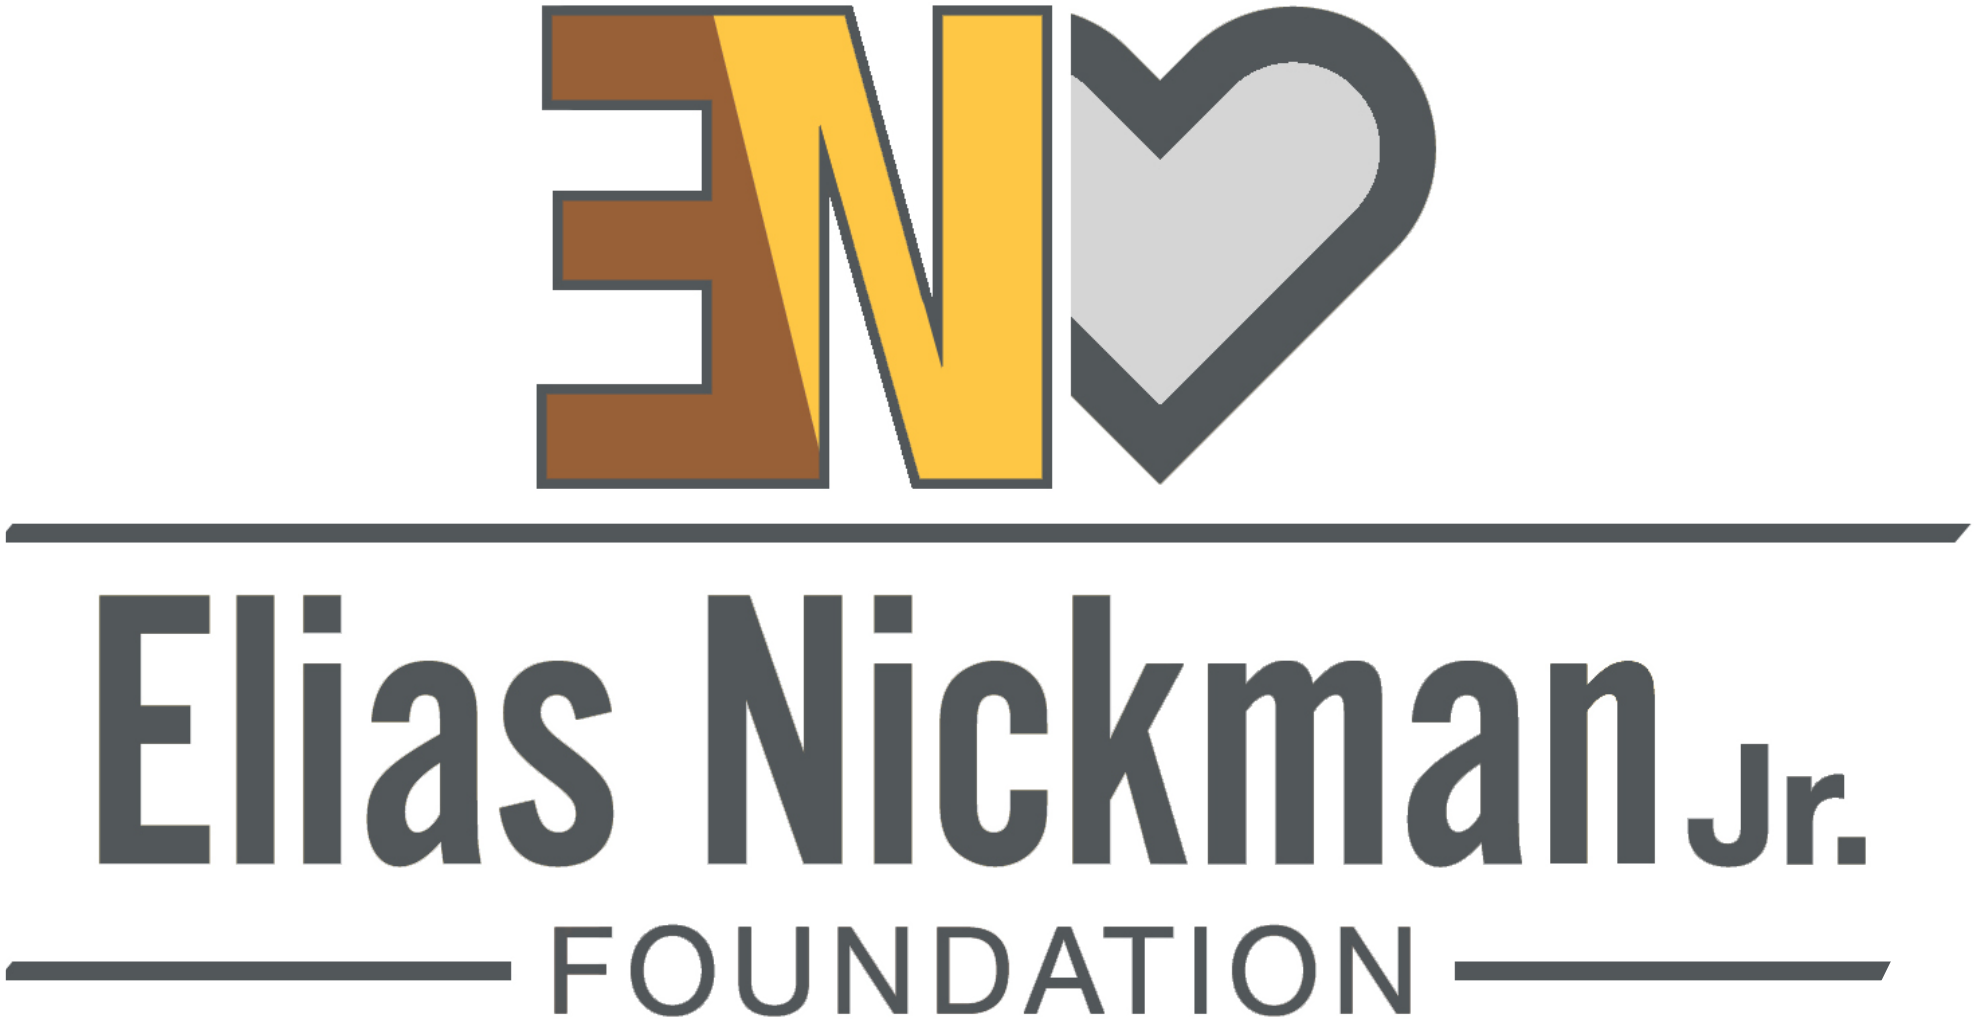 Elias Nickman Jr. Foundation